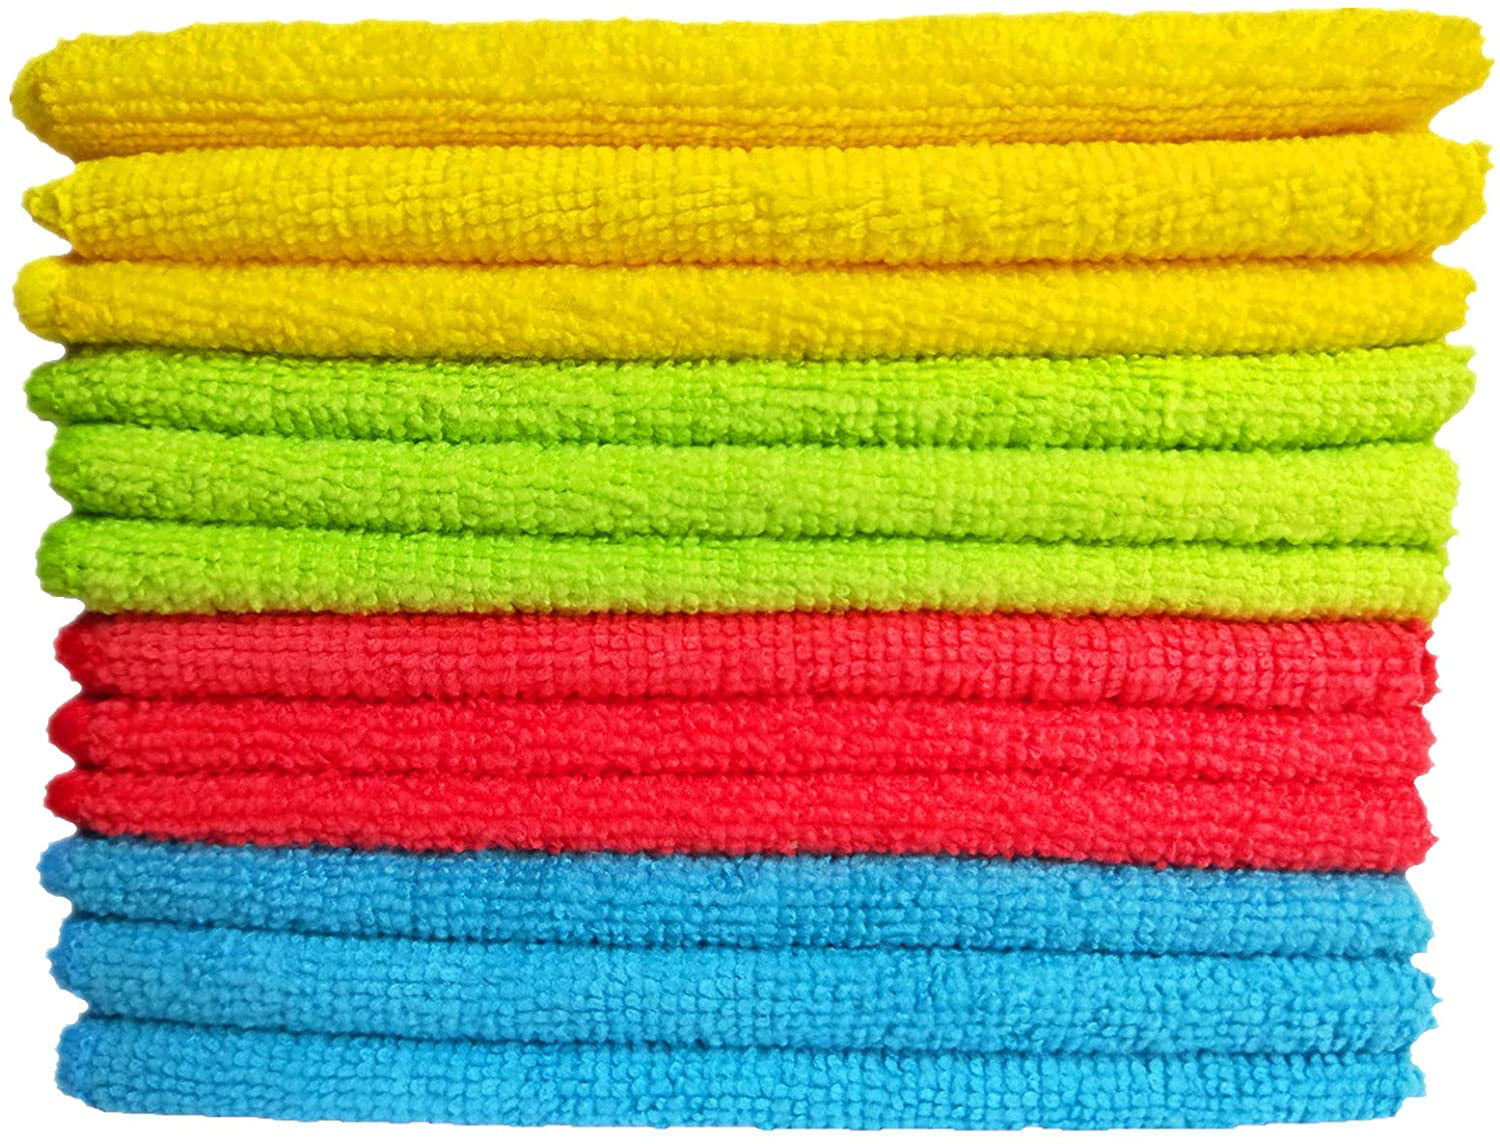 Details about   Kitchen Dish Cloths 12 Pack Bulk DishCloths Cotton Scrubbing Wash Rags 12x12 